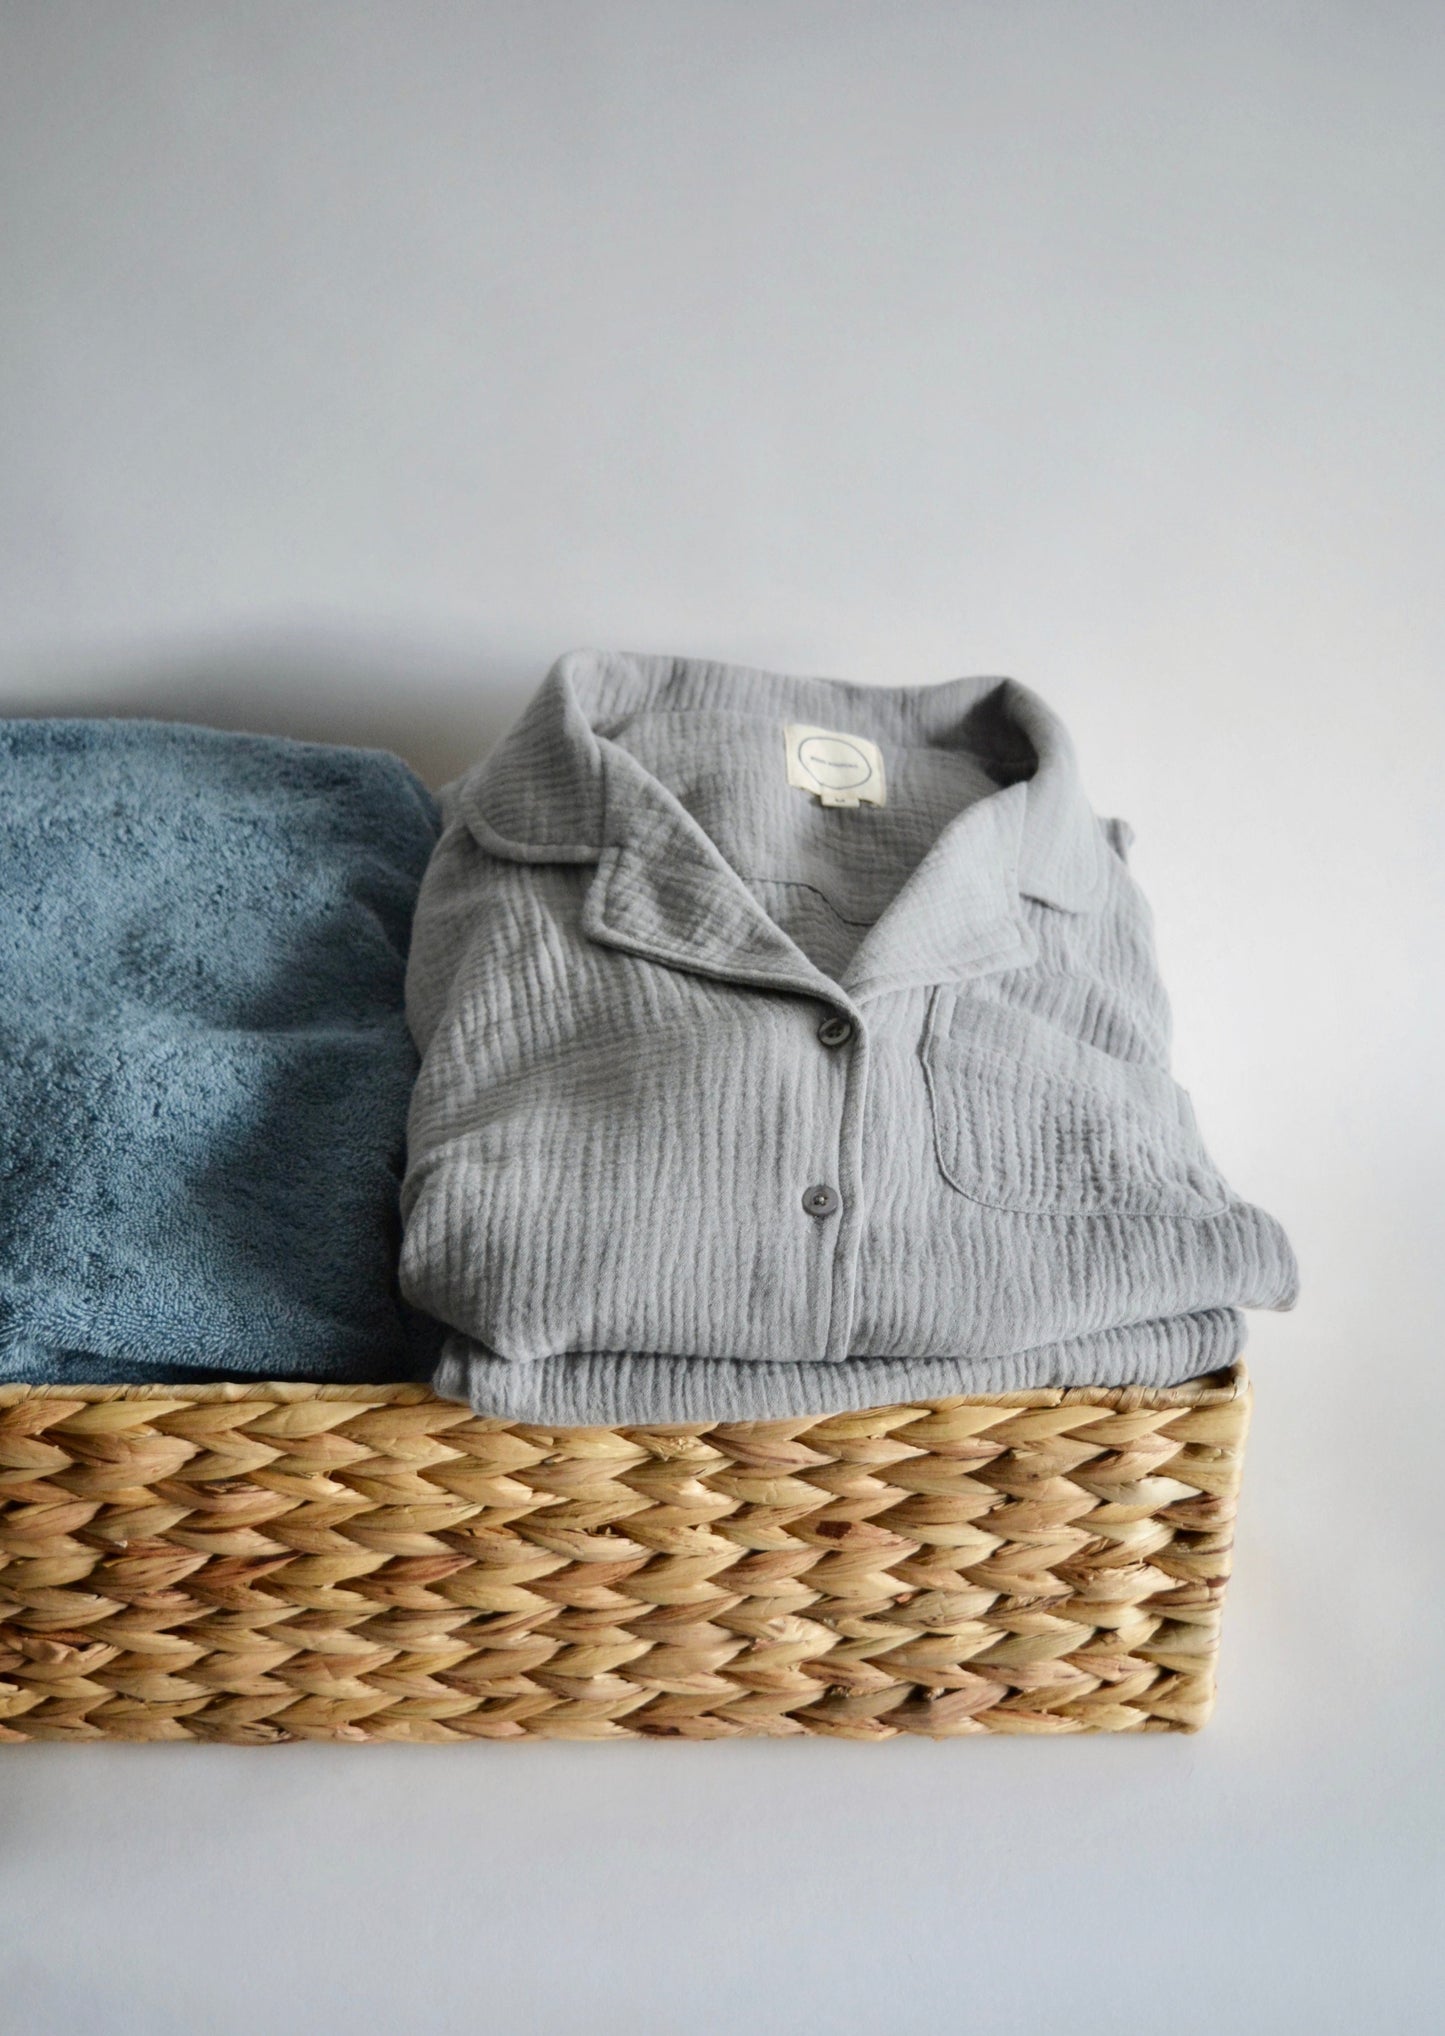 Cotton Muslin double gauze Sleepwear Set pajama set in grey color